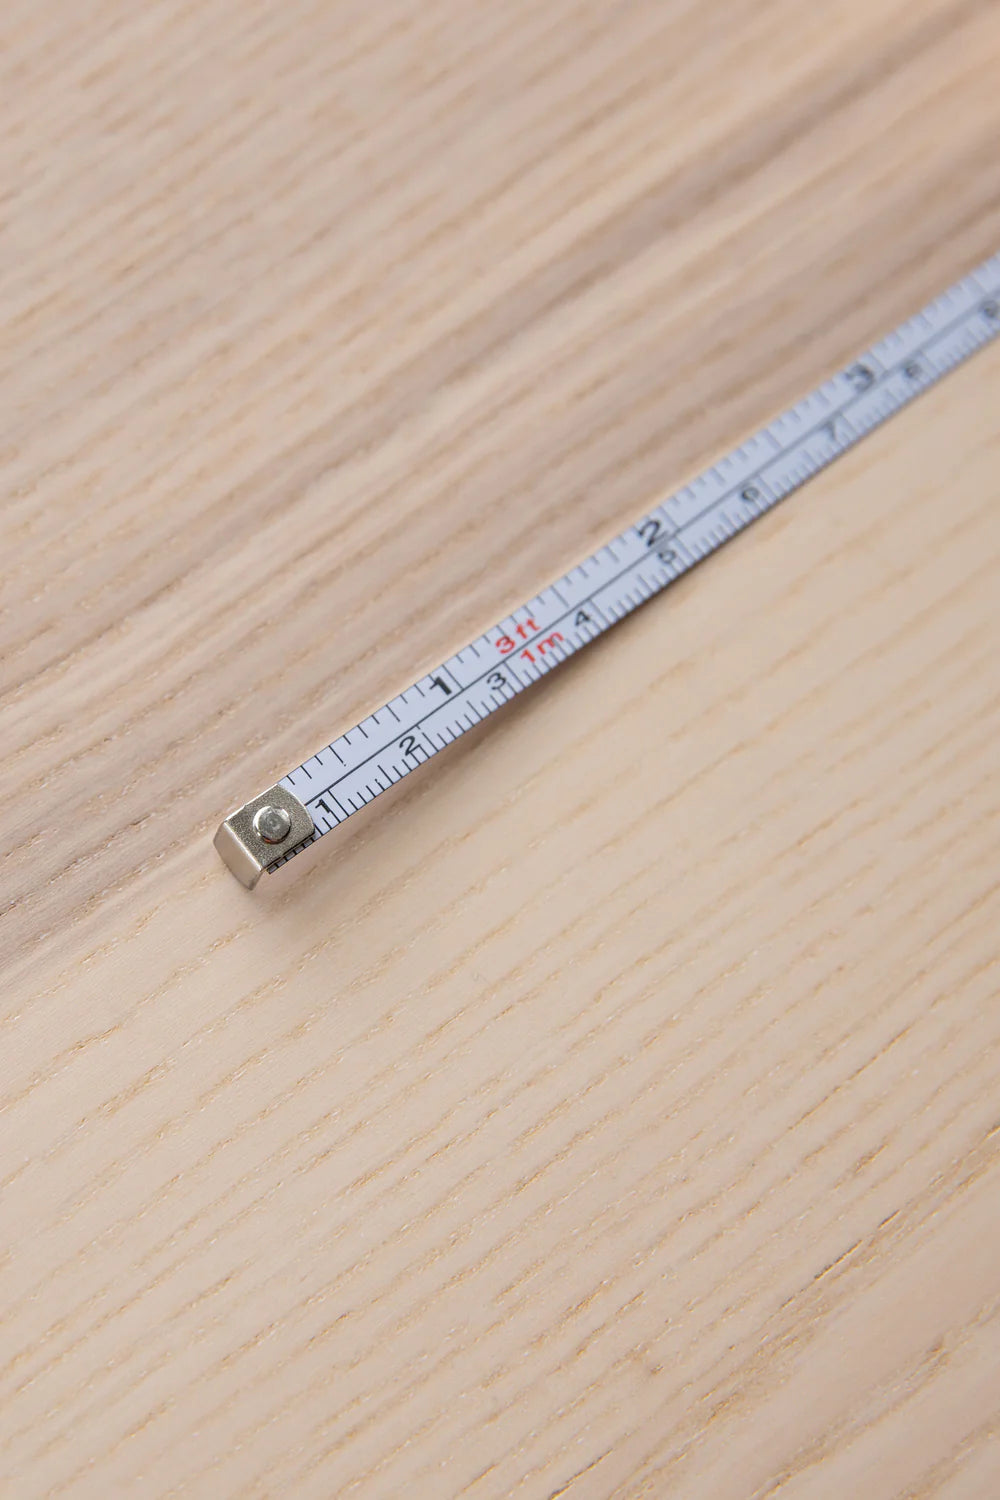 Retractable Wooden Tape Measure